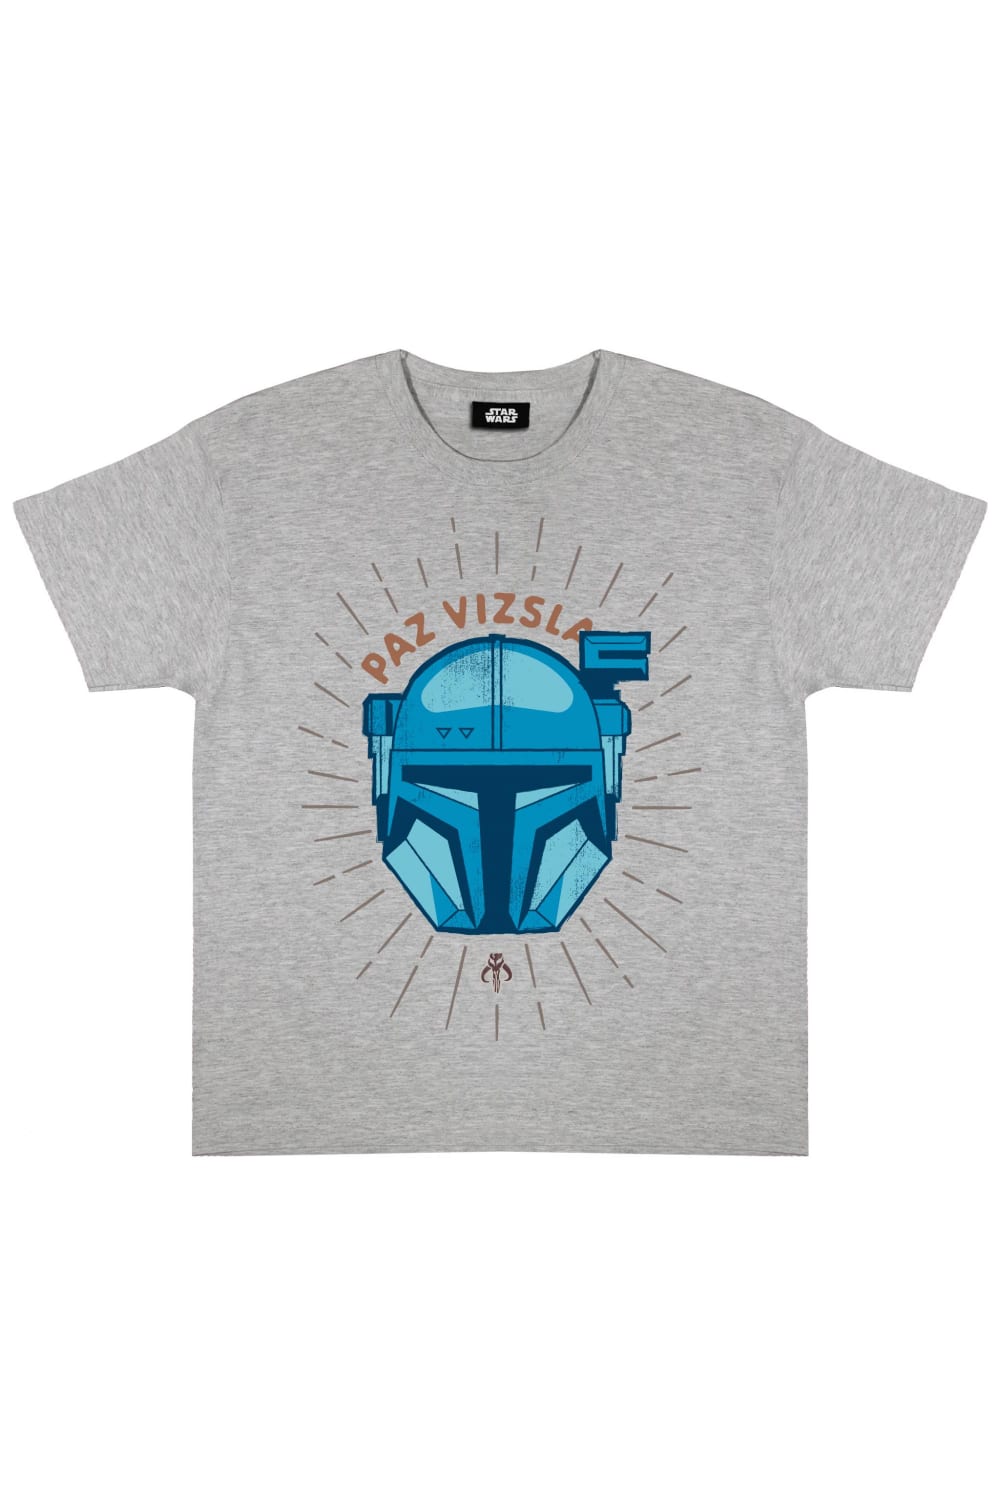 Star Wars: The Mandalorian Girls Paz Vizsla T-Shirt (Heather Grey)